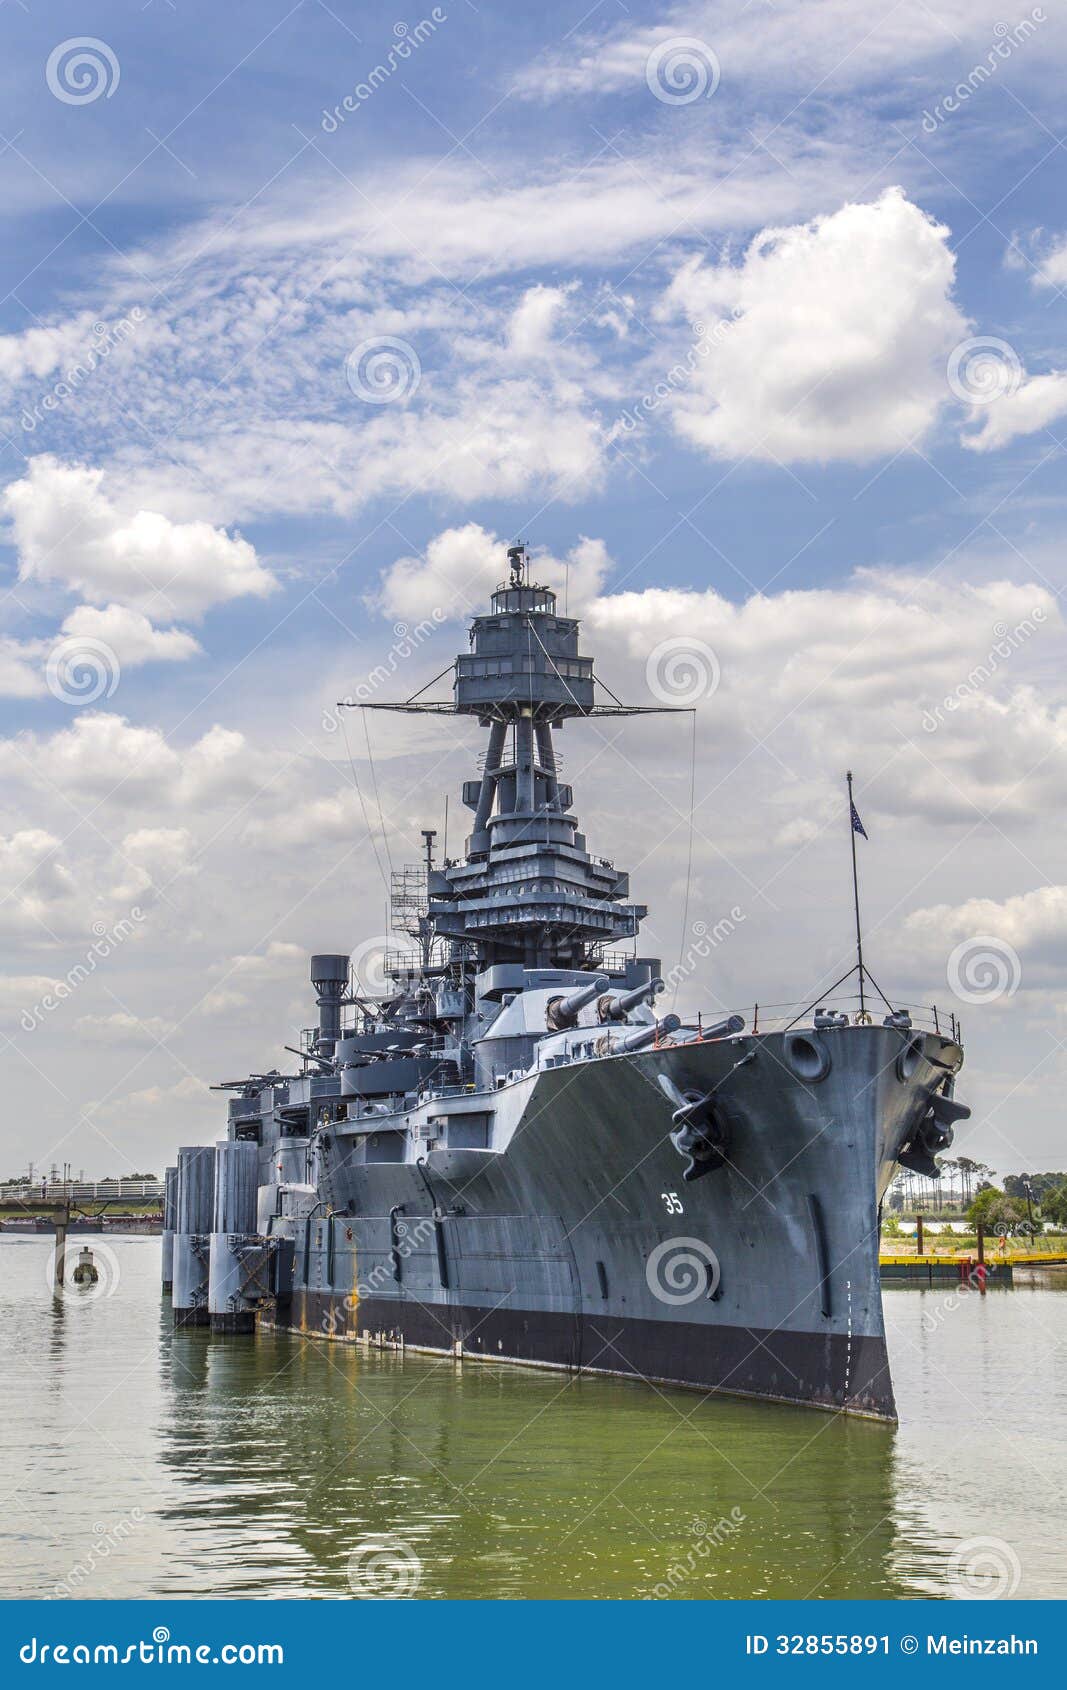 the famous dreadnought battleship